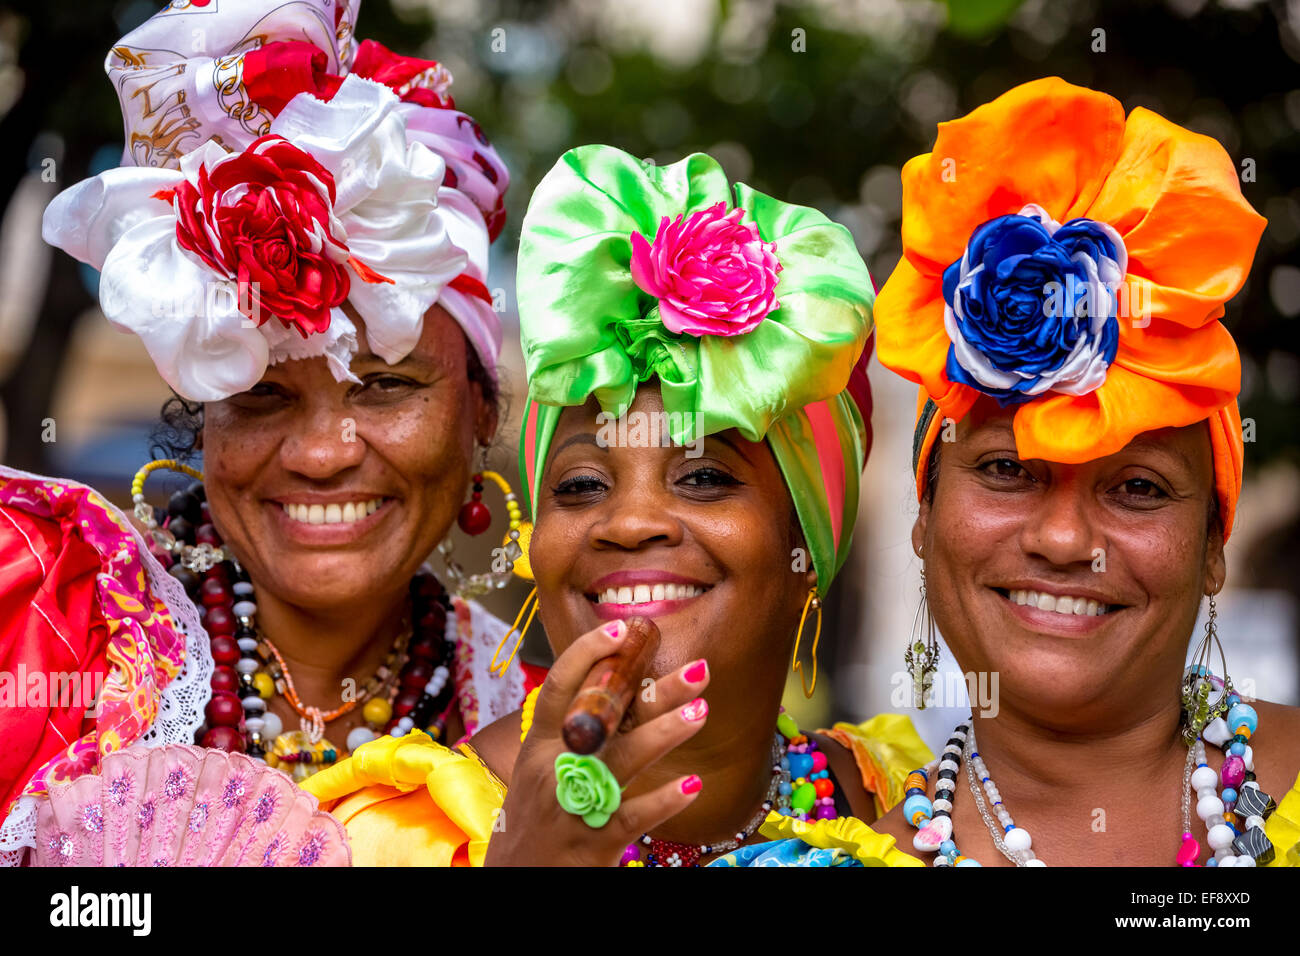 Three Cuban women in colorful Spanish-inspired costumes, Havana, Cuba Stock Photo